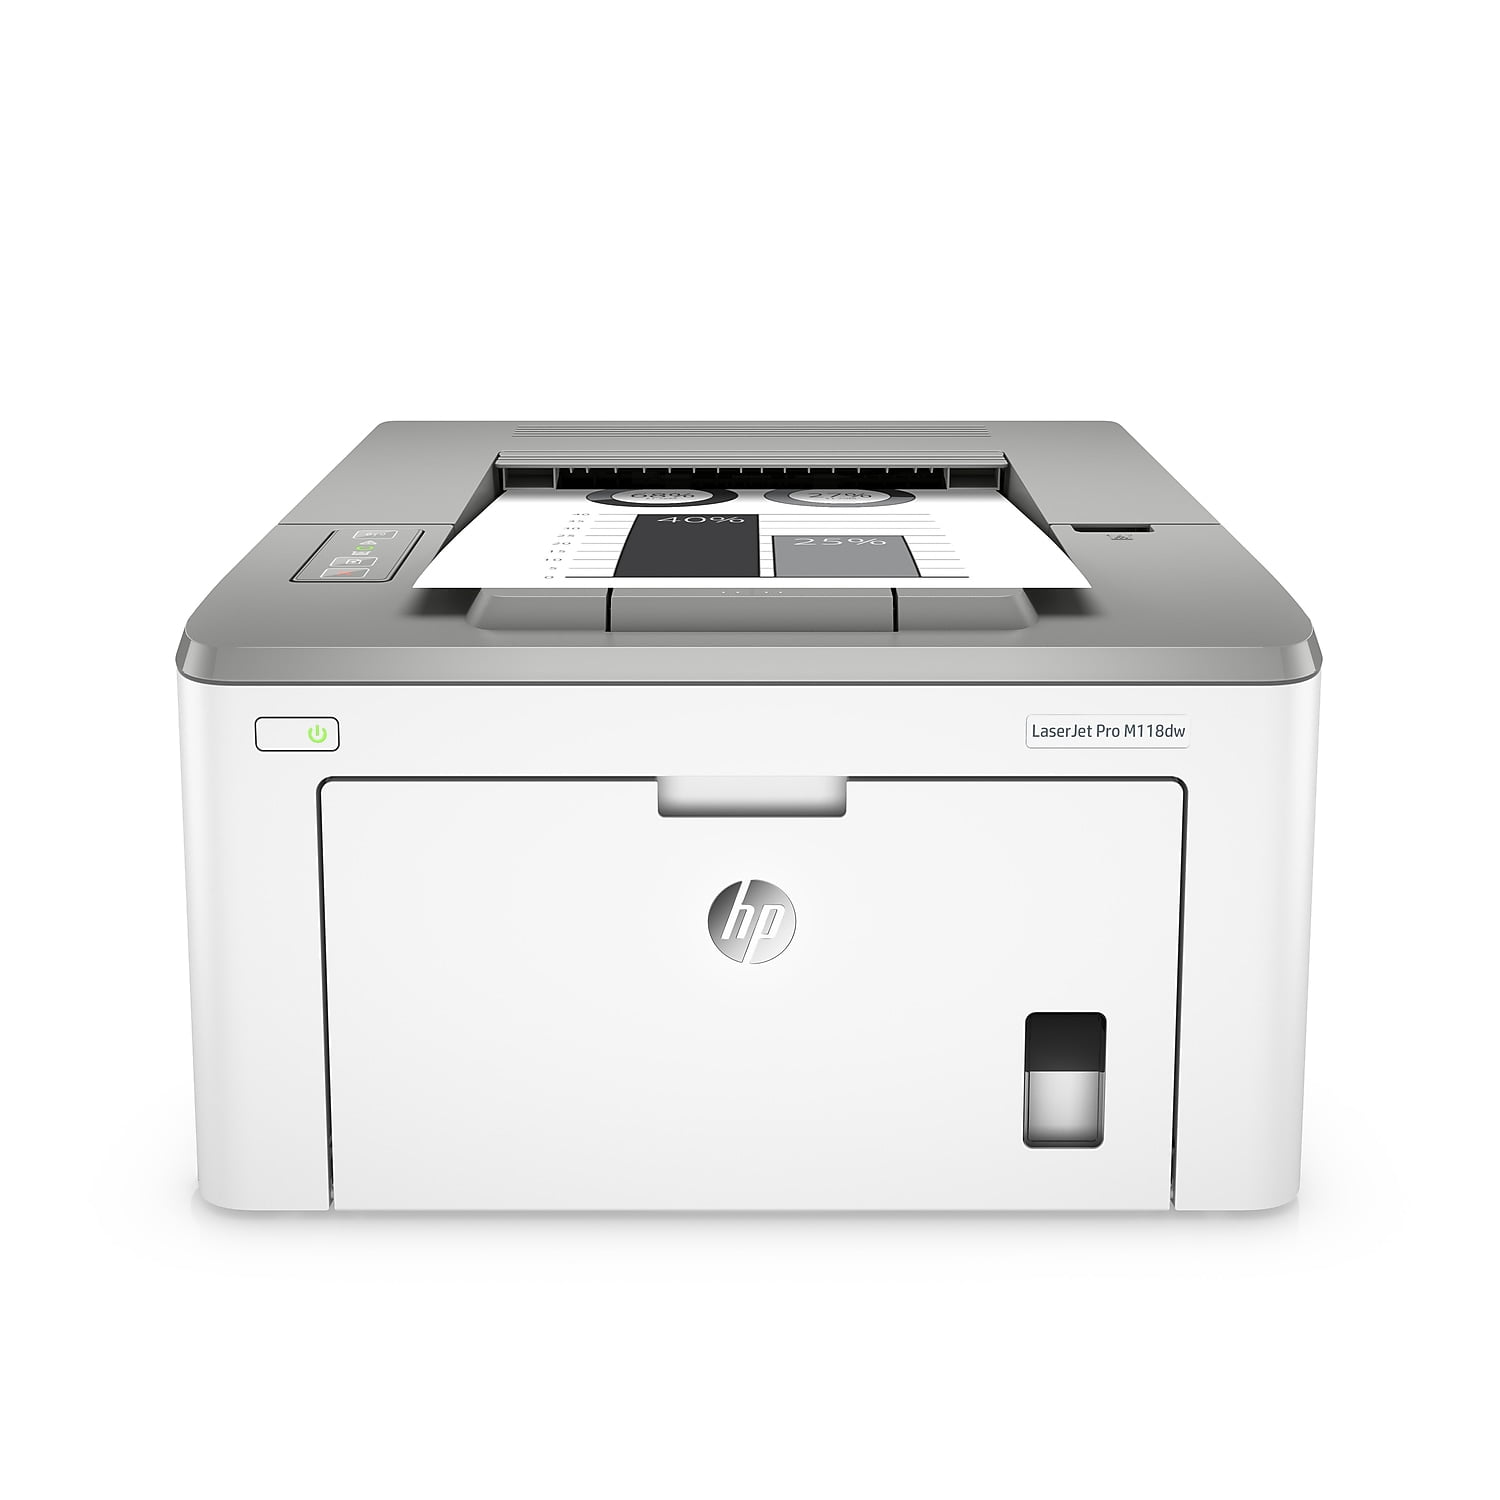 HP LaserJet Pro M118DW Printer, Up to1200x1200 dpi, 10/100 Ethernet, up to 30 black - Walmart.com